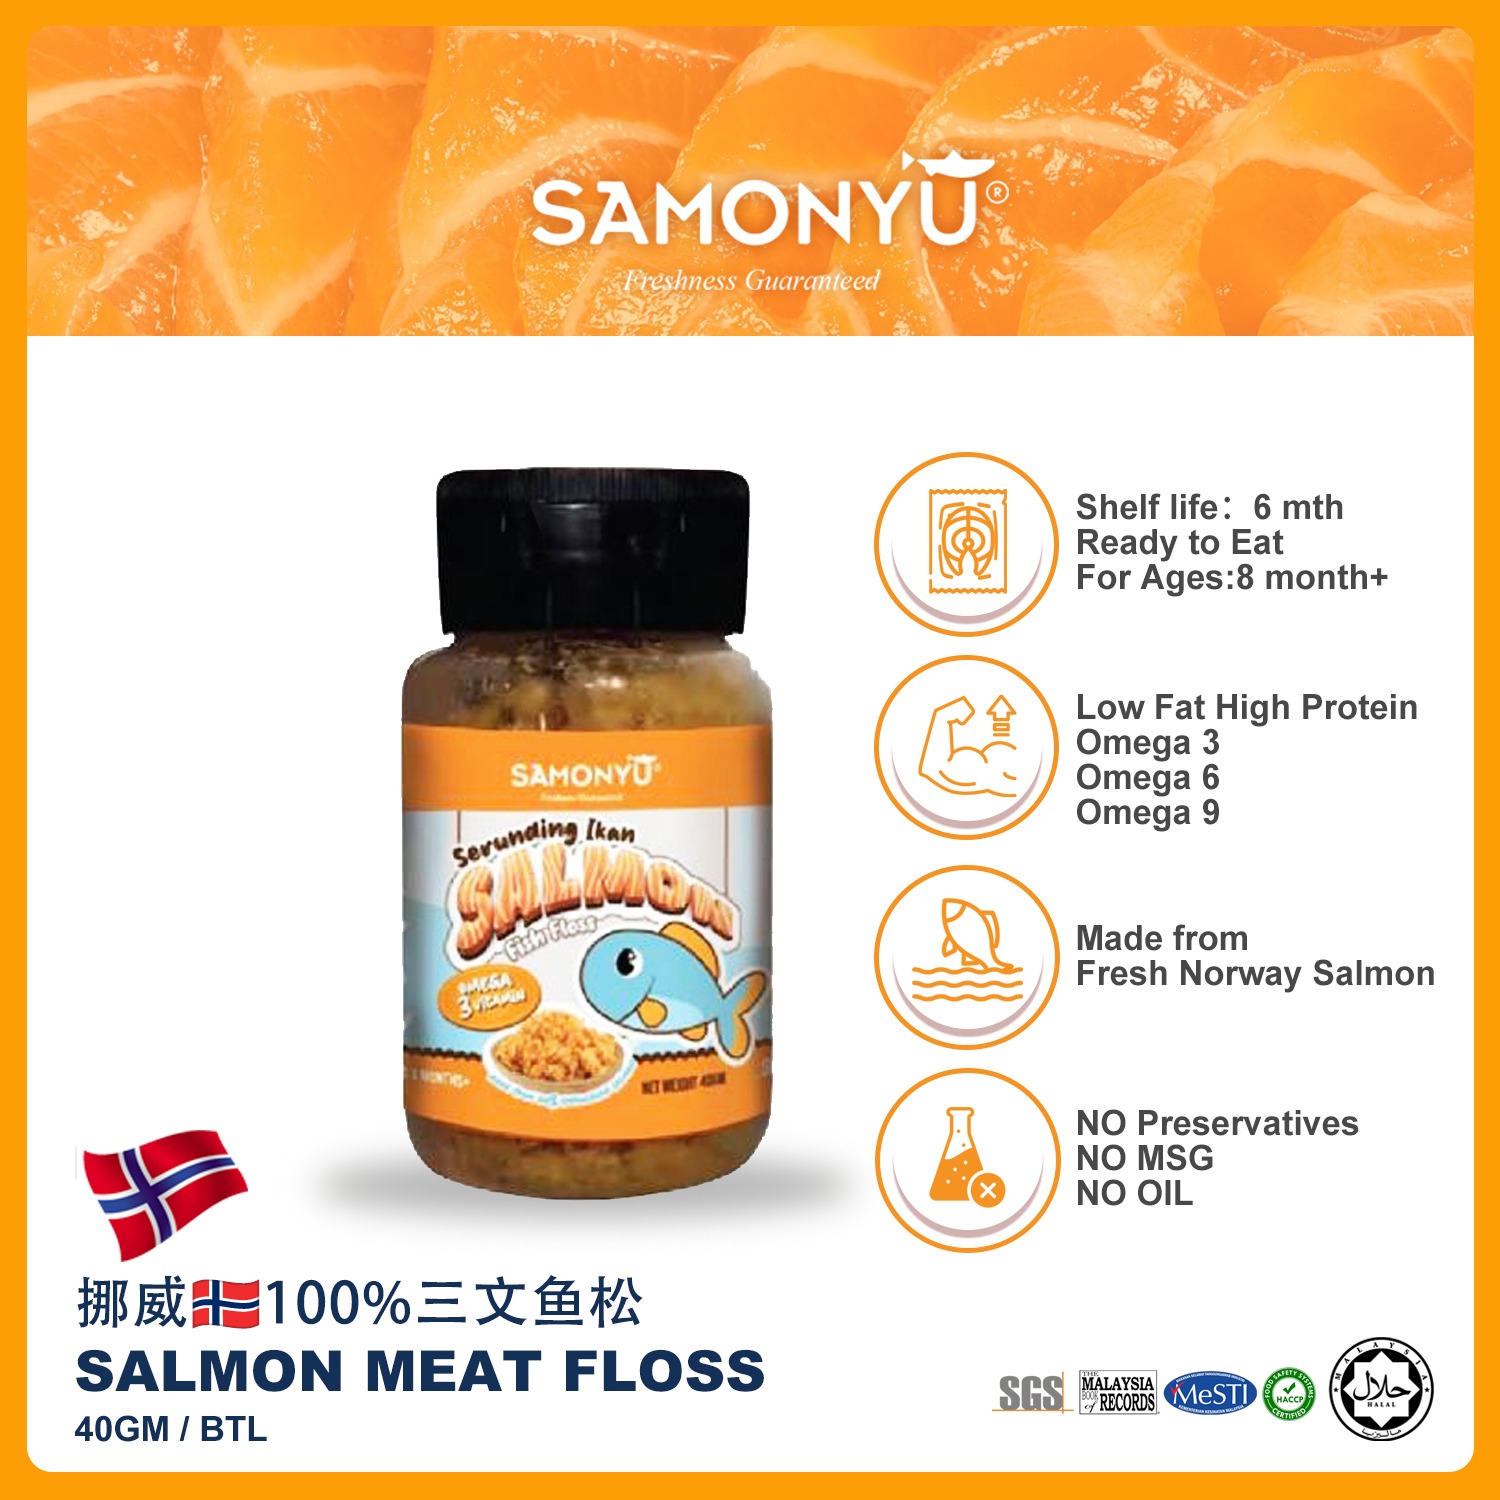 SALMON MEAT FLOSS (40g)